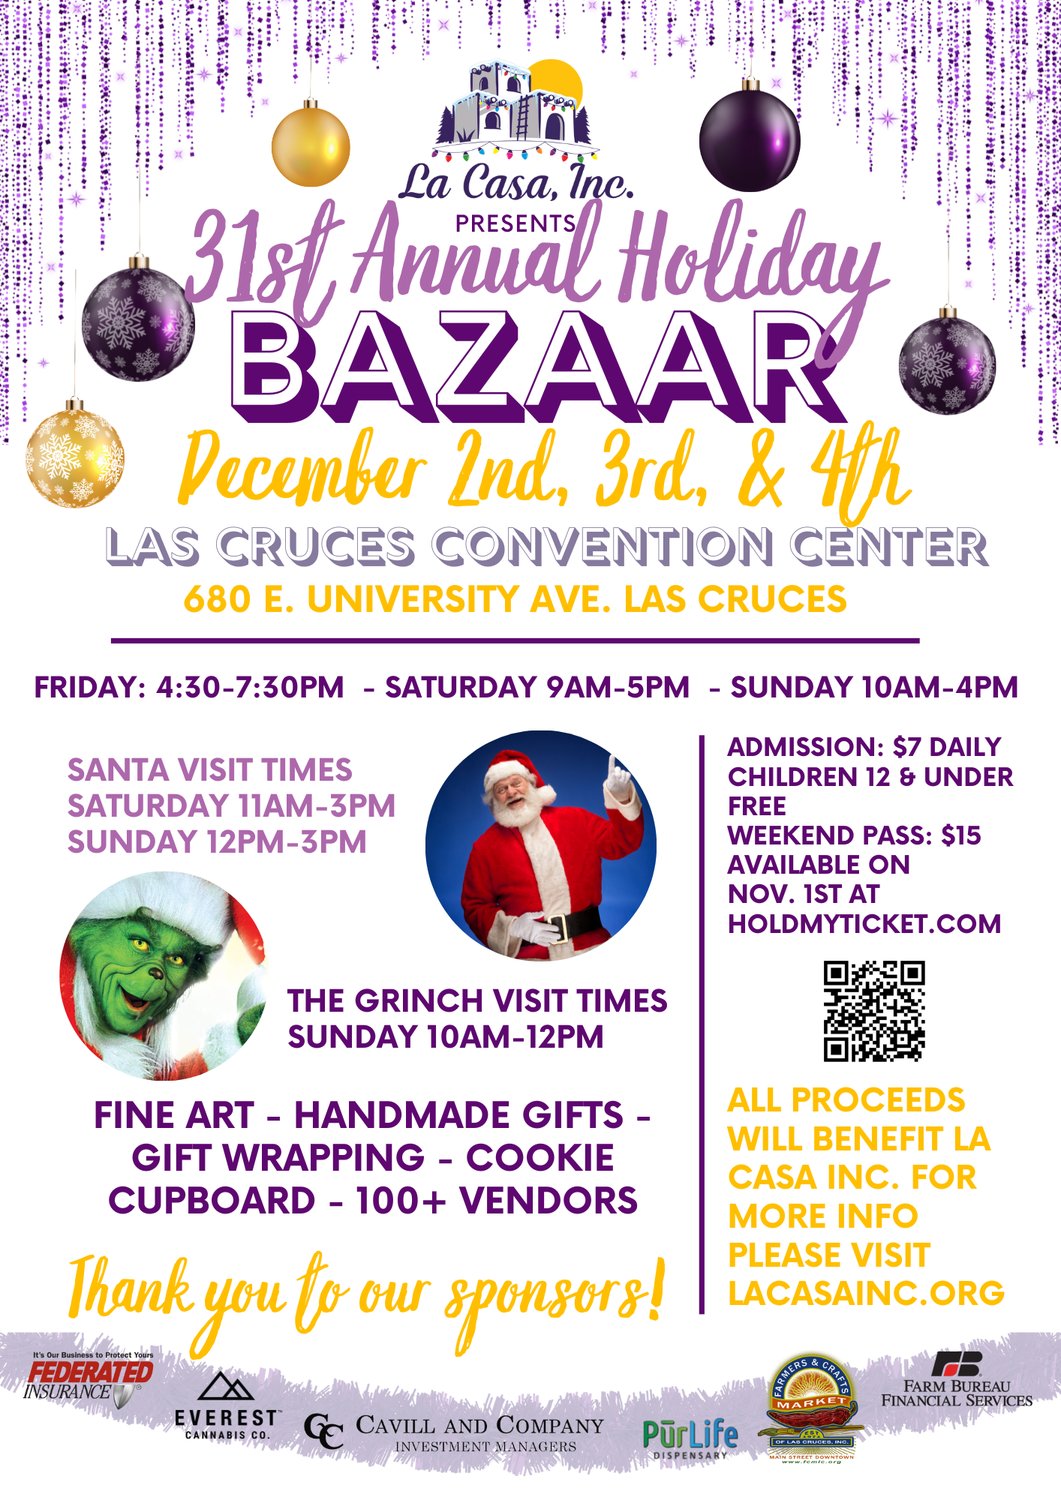 La Casa Holiday Bazaar is Dec. 24 at Convention Center Desert Exposure